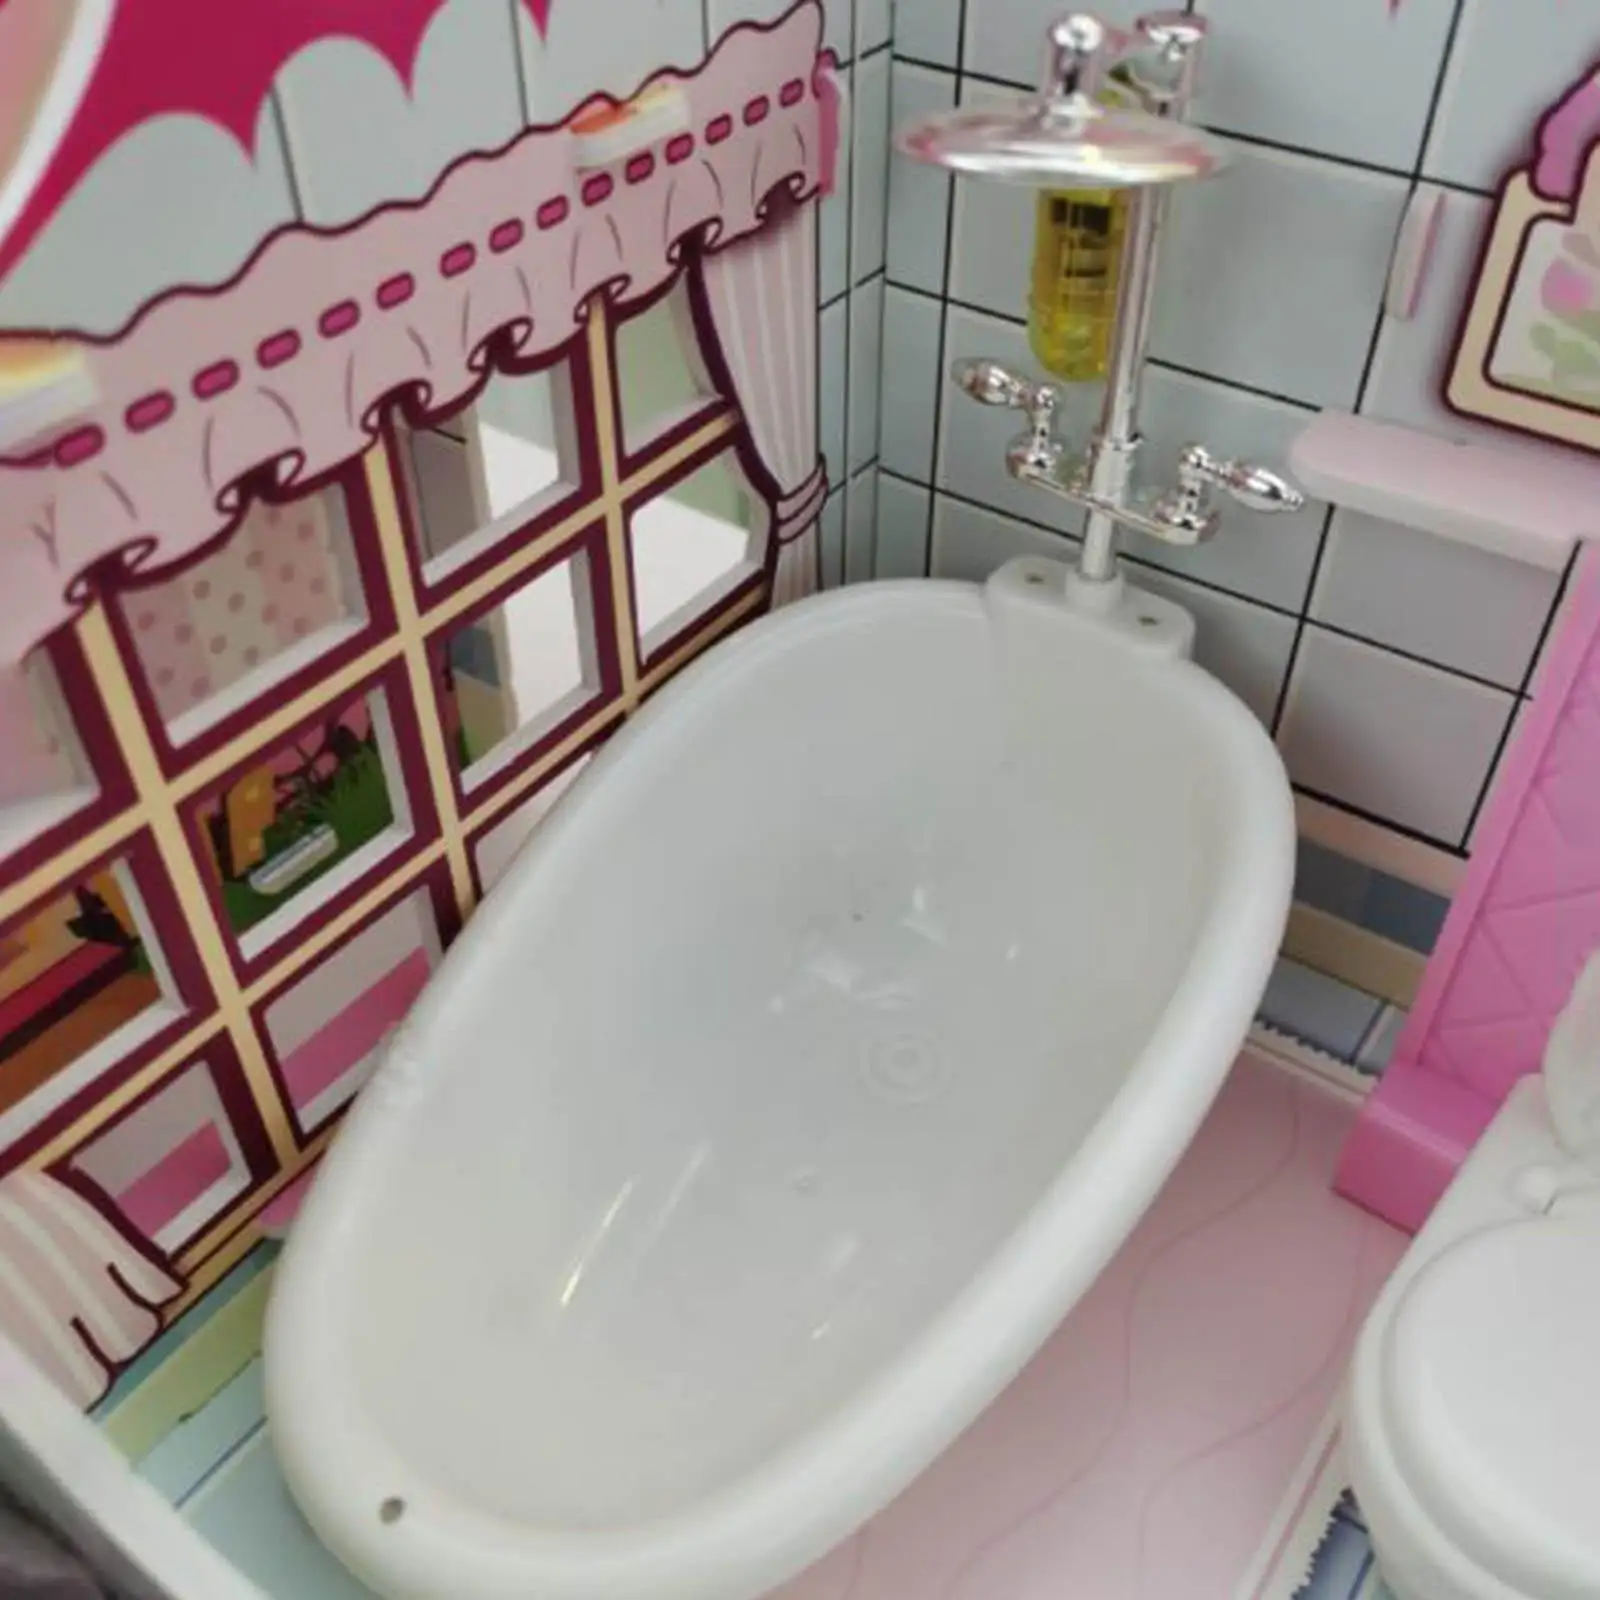 Handmade Mini Bathtub Dollhouse Furniture Accessory Birthday Gifts